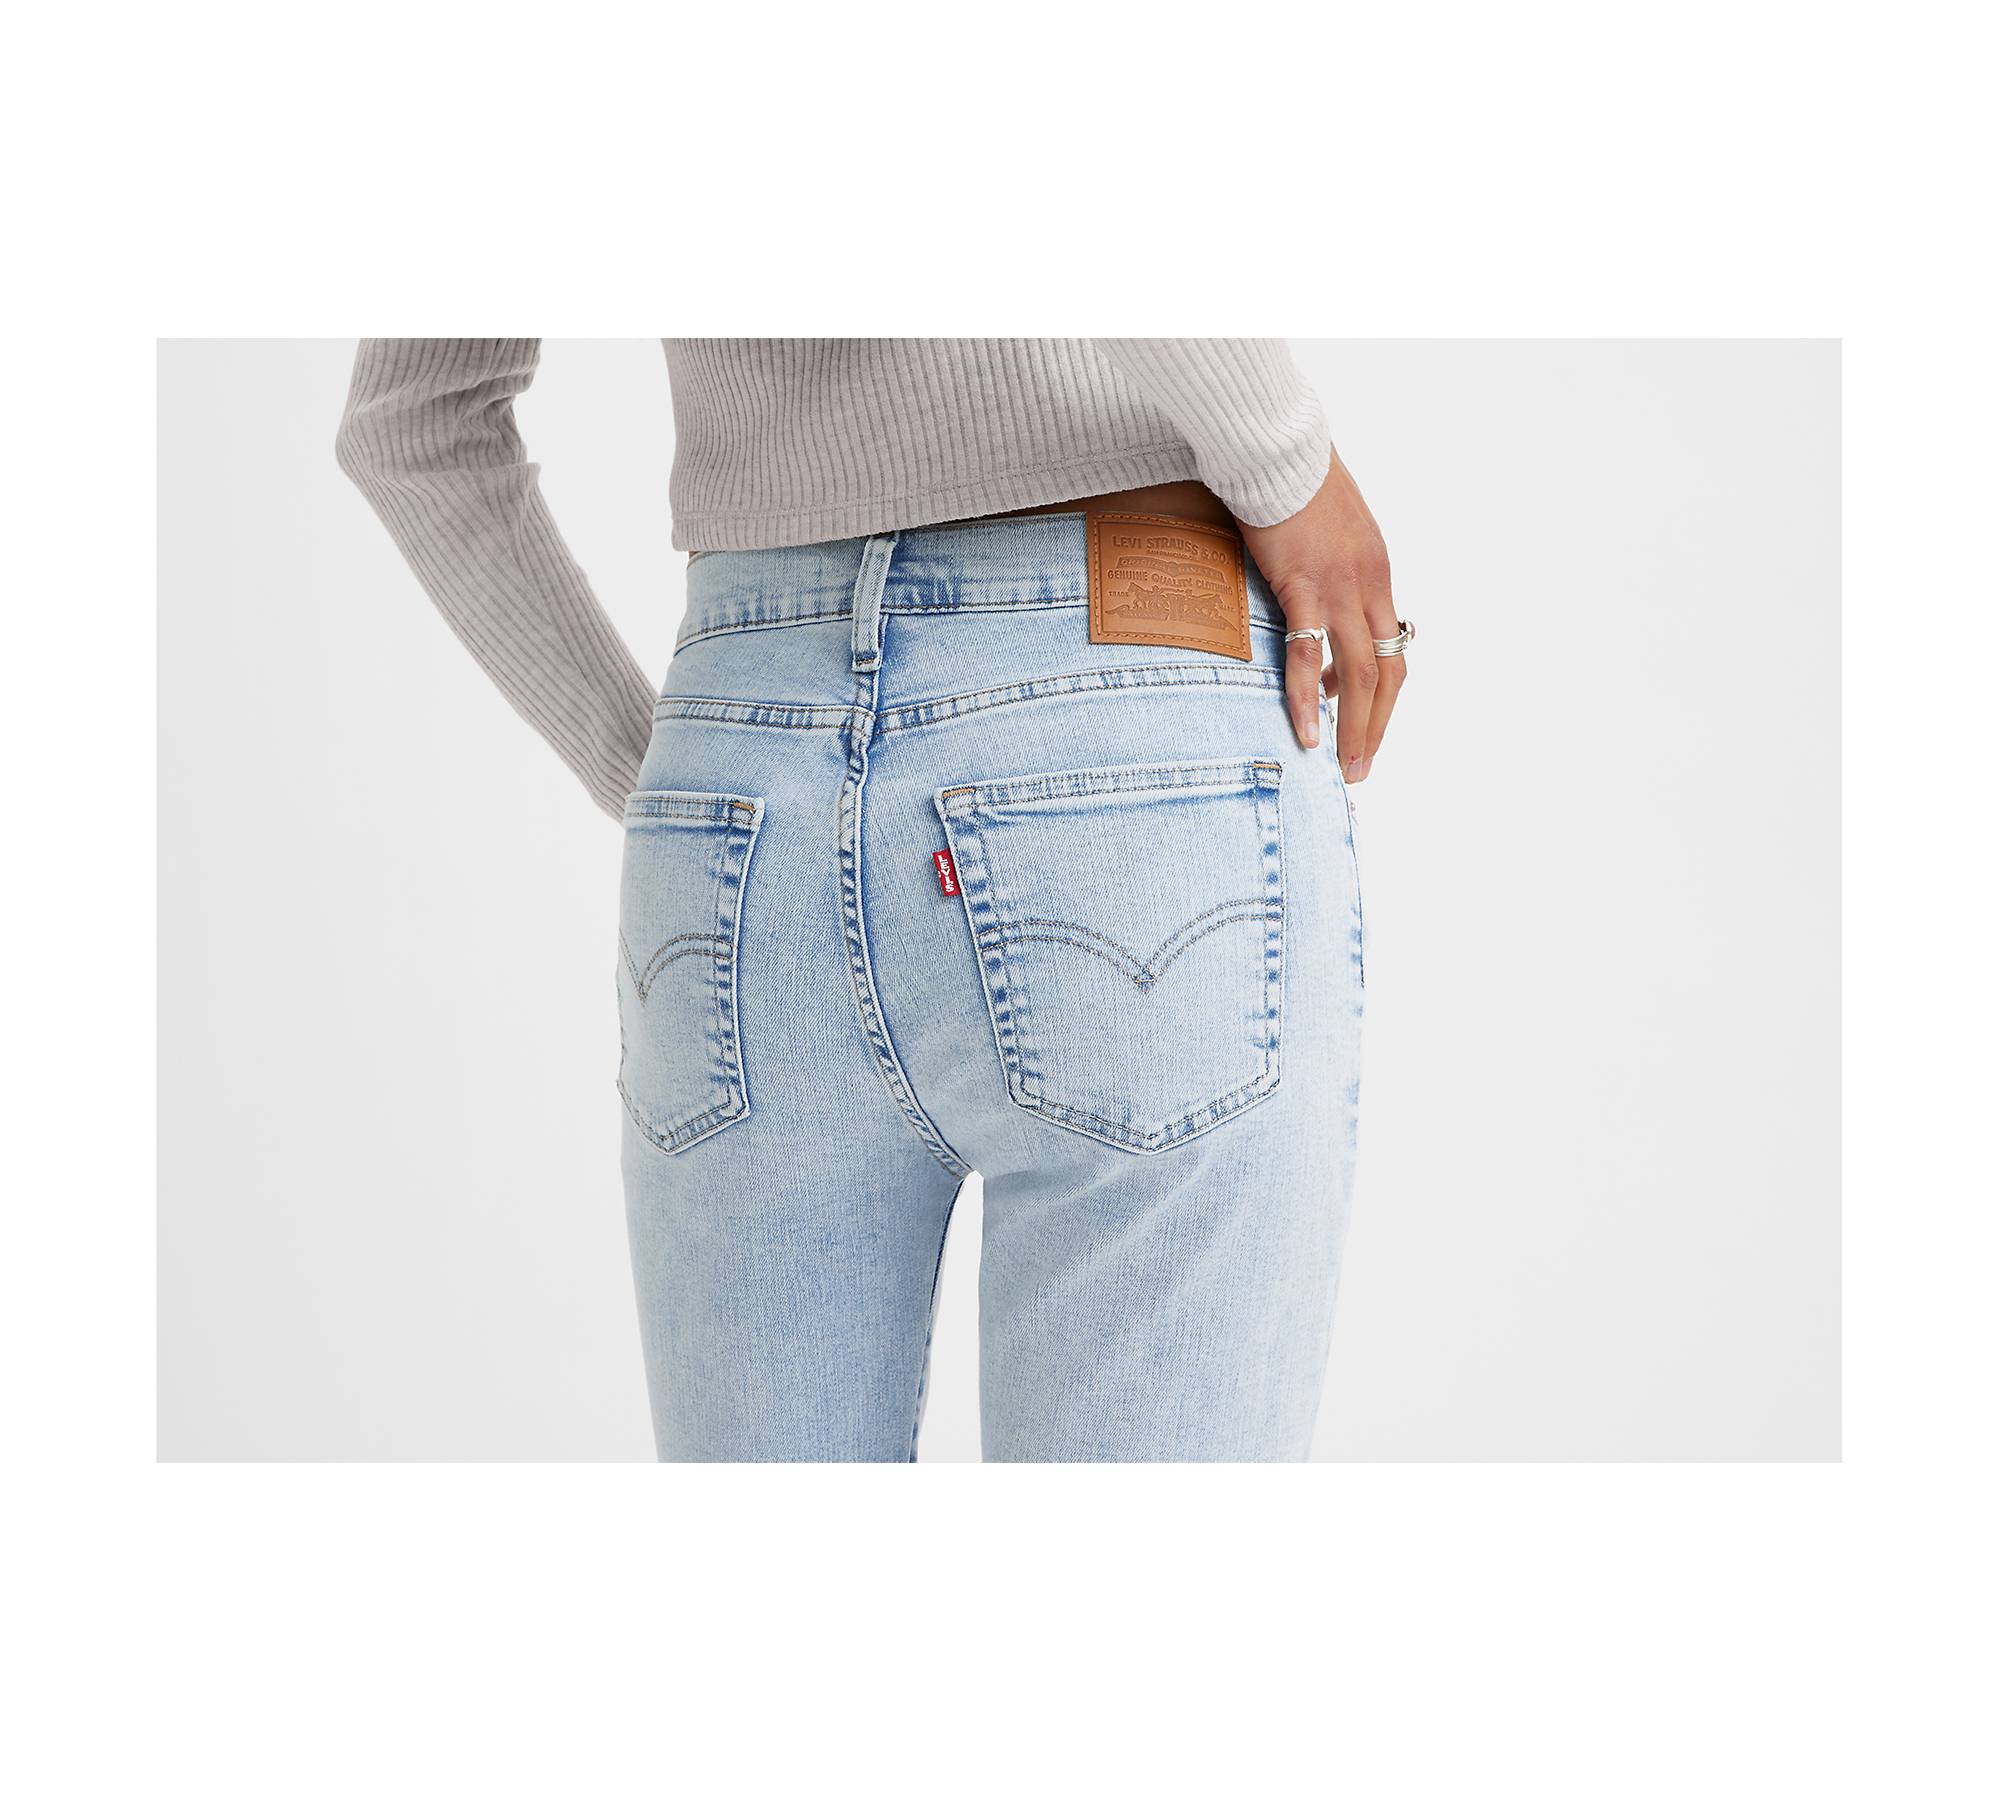 Levis Slimming Skinny Fit Women's Jeans Original